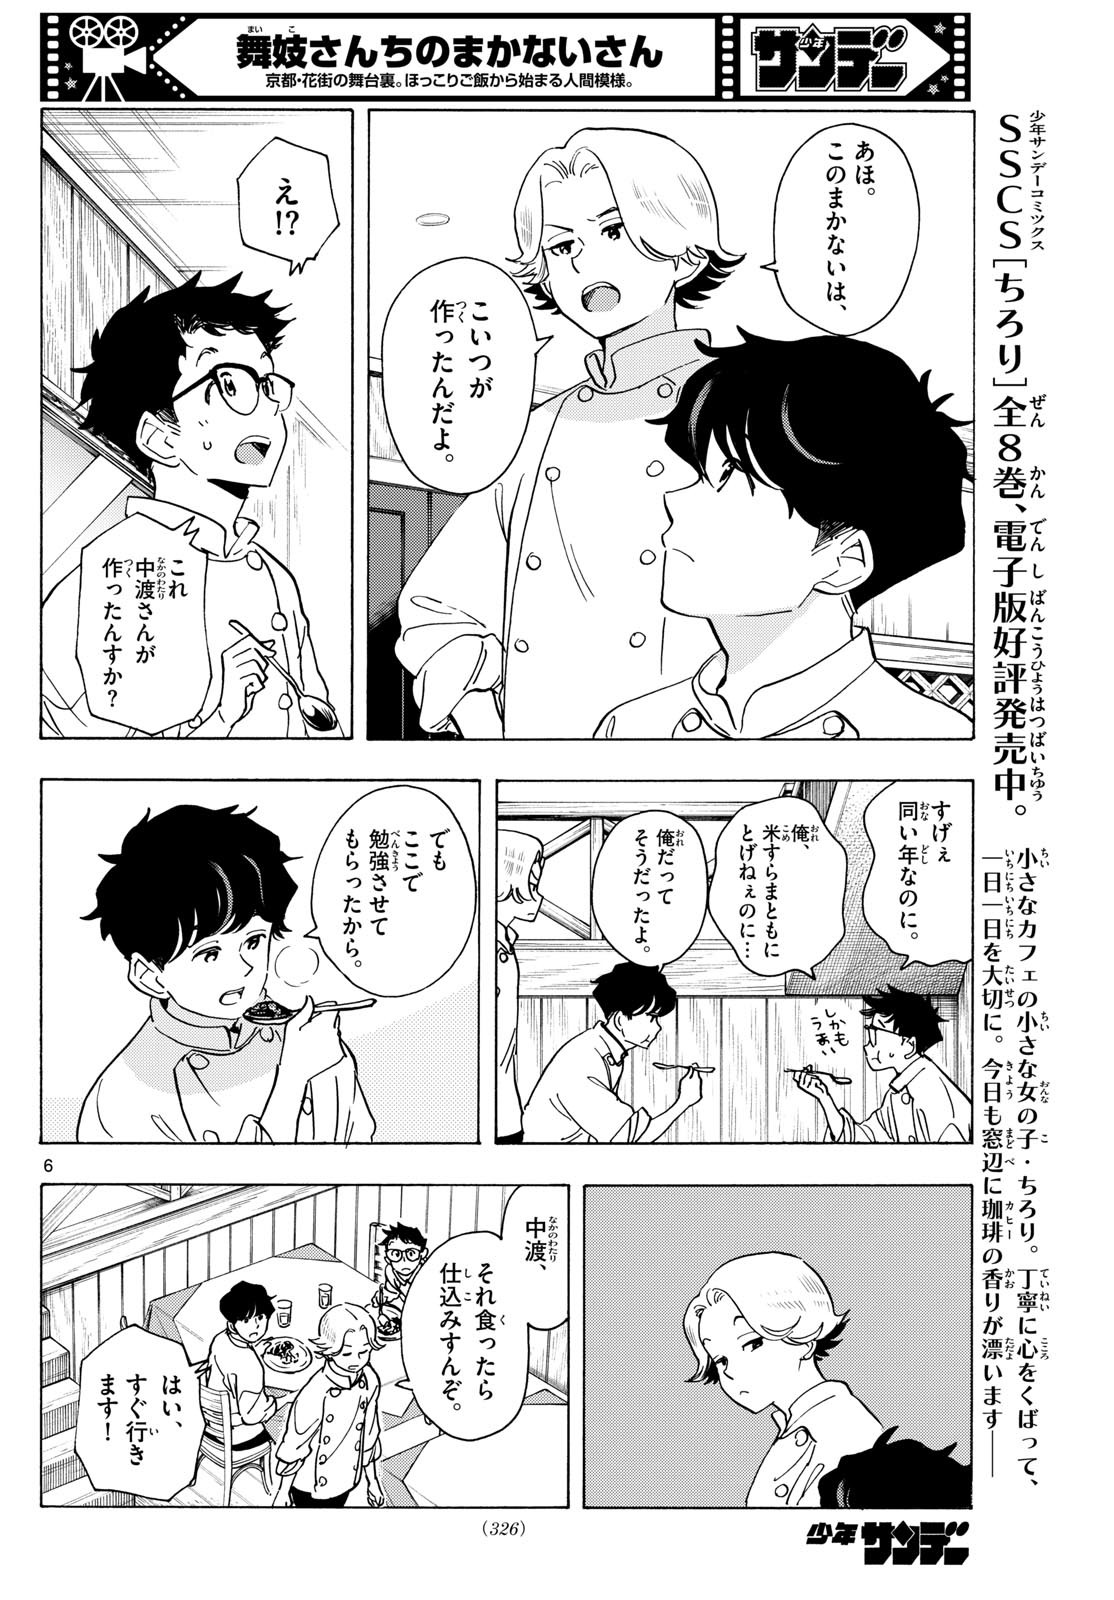 Maiko-san Chi no Makanai-san - Chapter 308 - Page 6